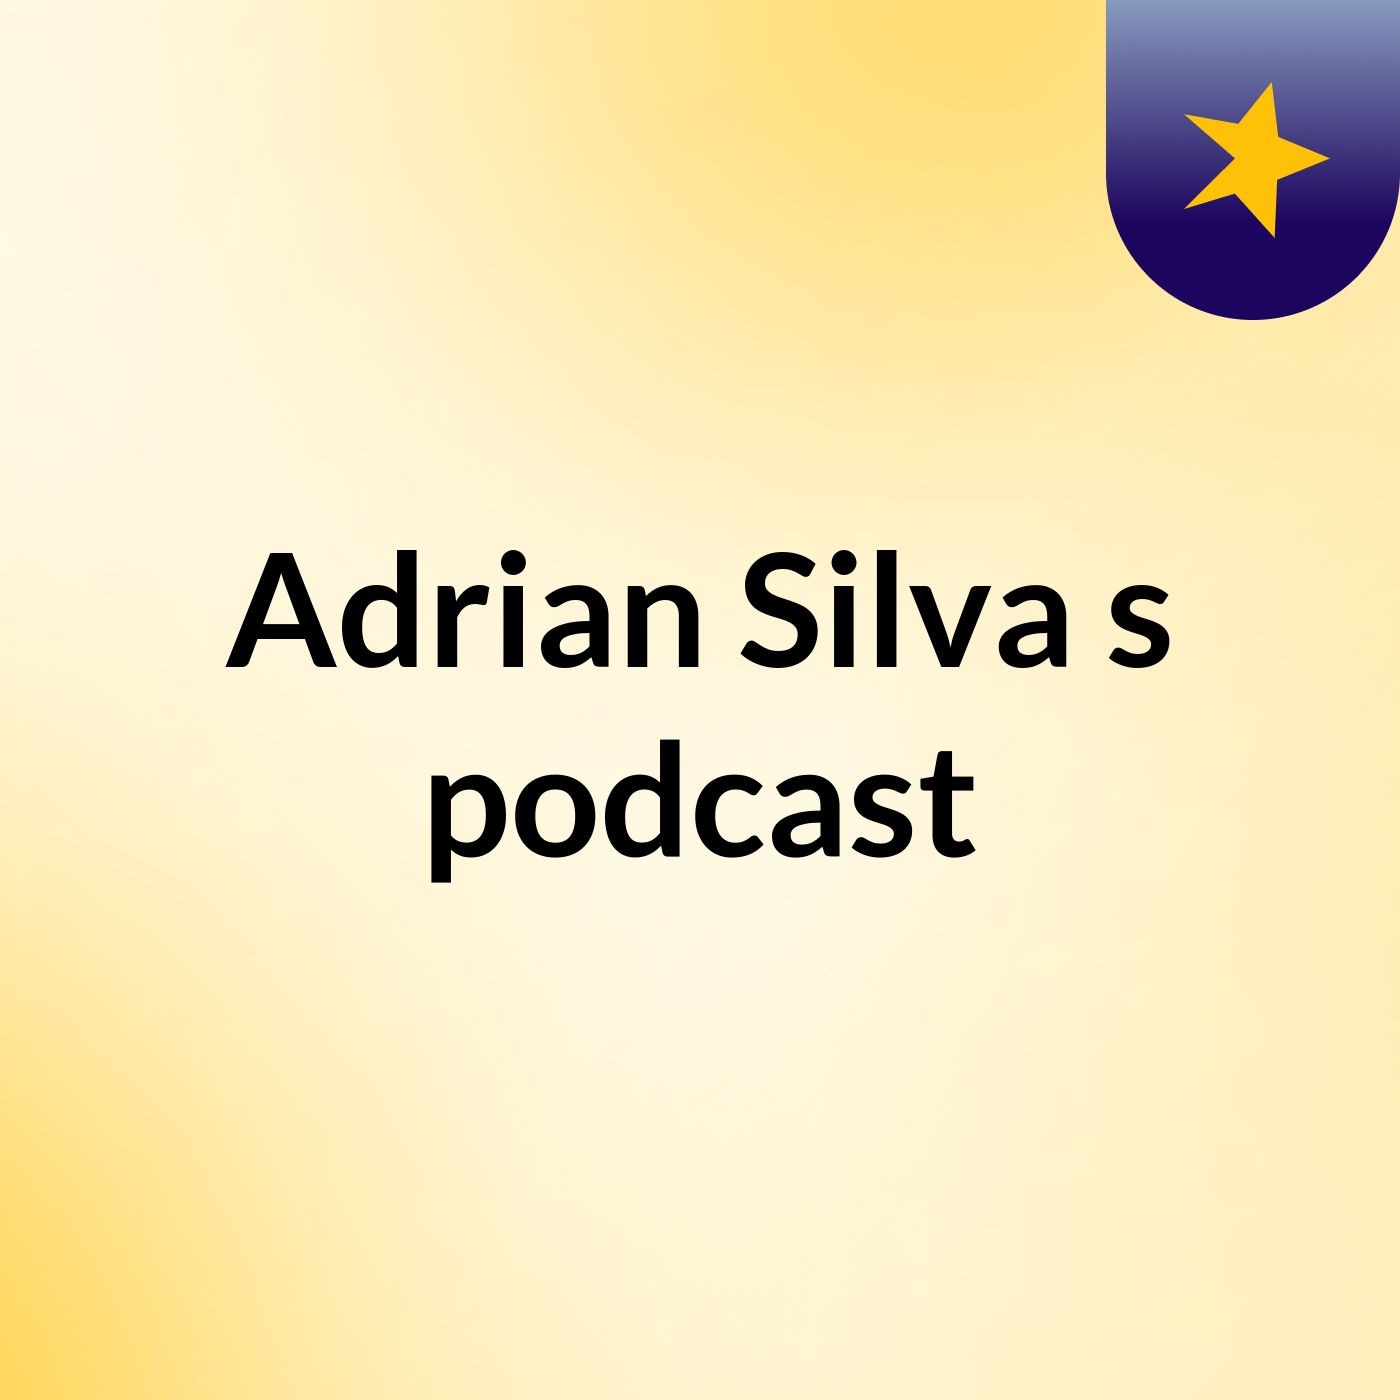 Adrian Silva's podcast